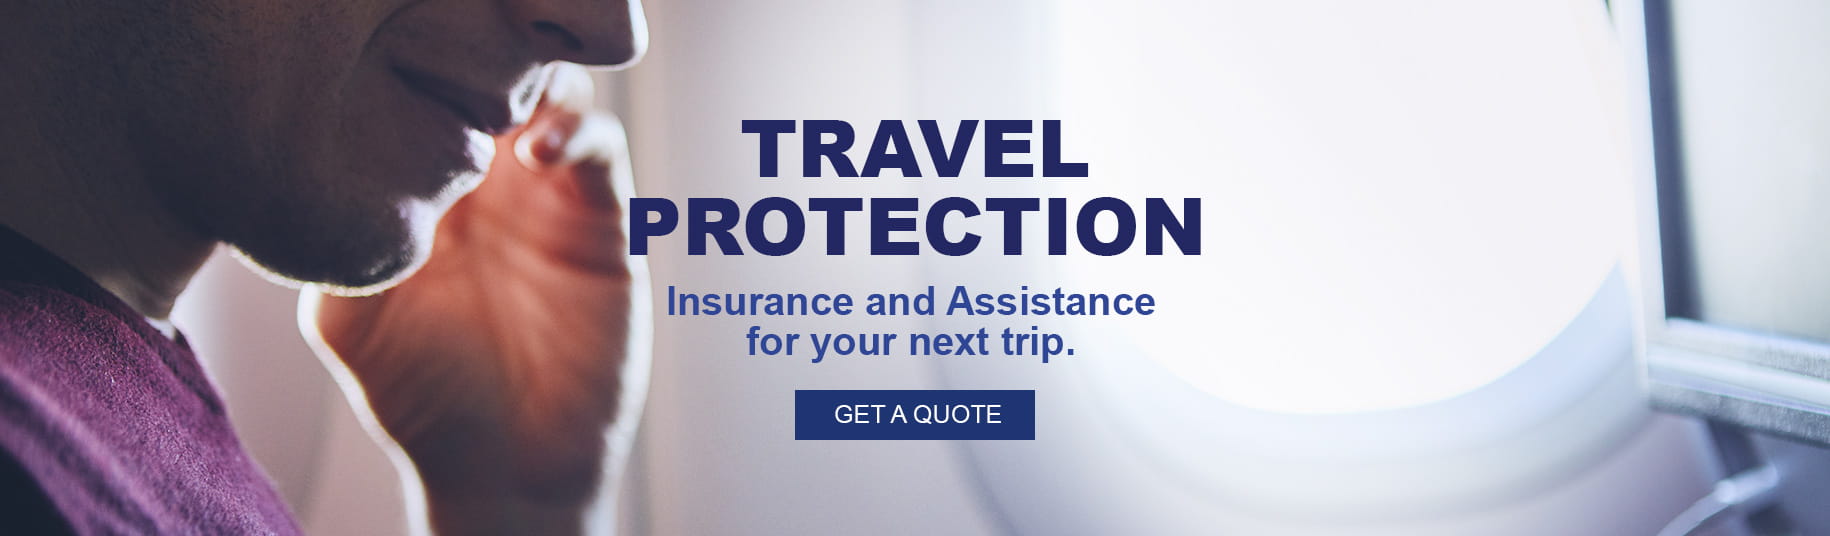 Personal membership - Travel insurance and assistance | International SOS